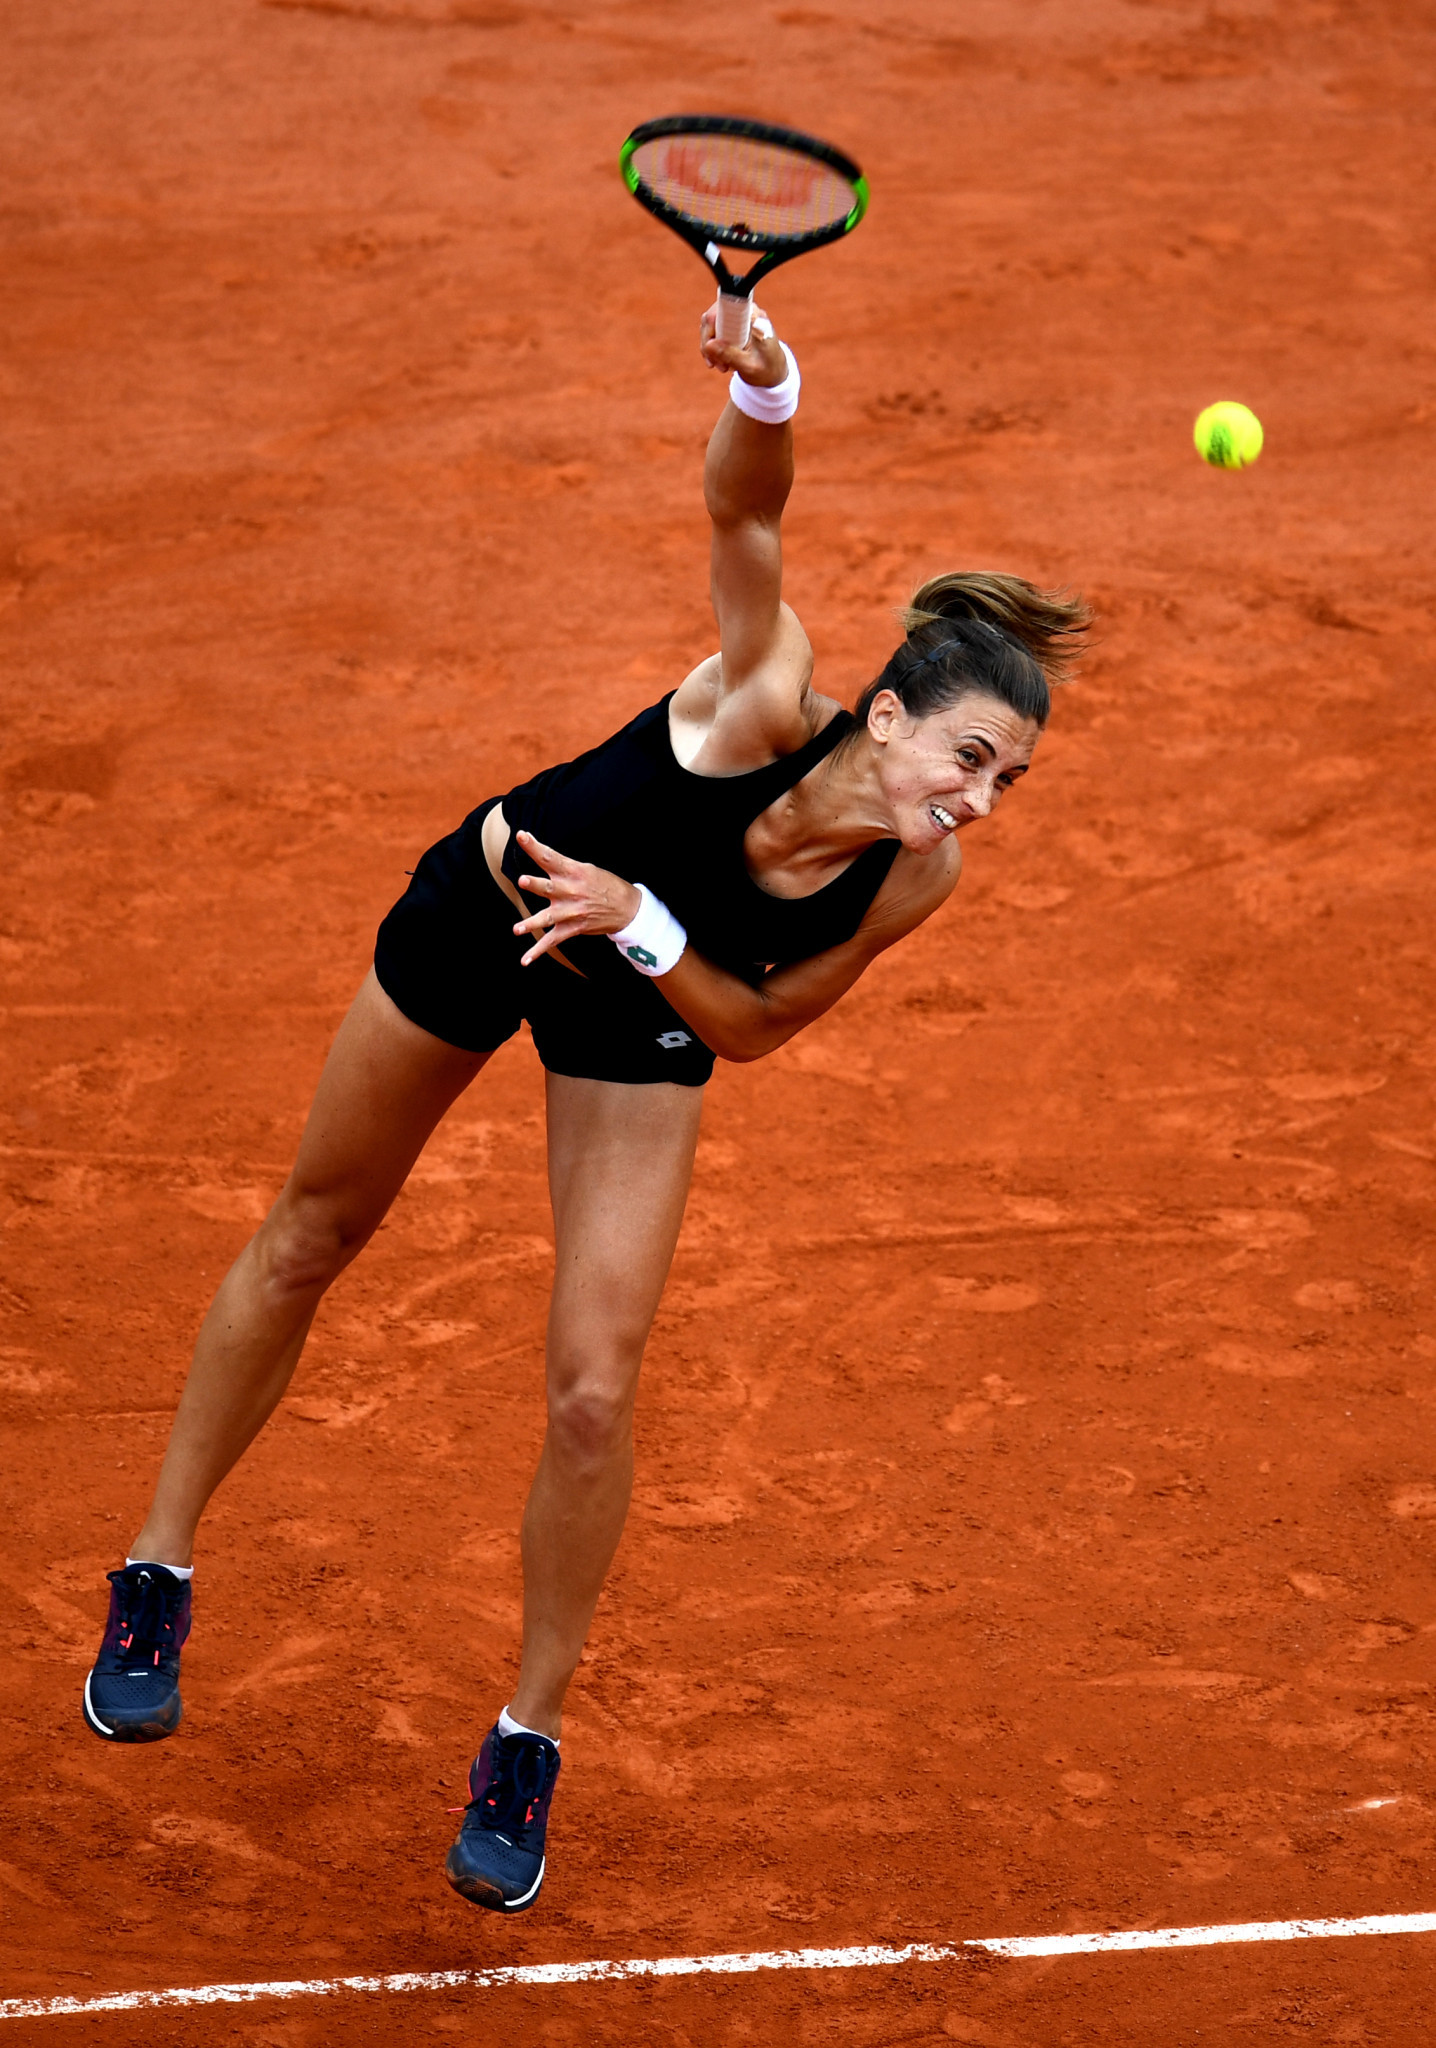 Martić in sizzling form to oust second seed Plíšková at Roland Garros